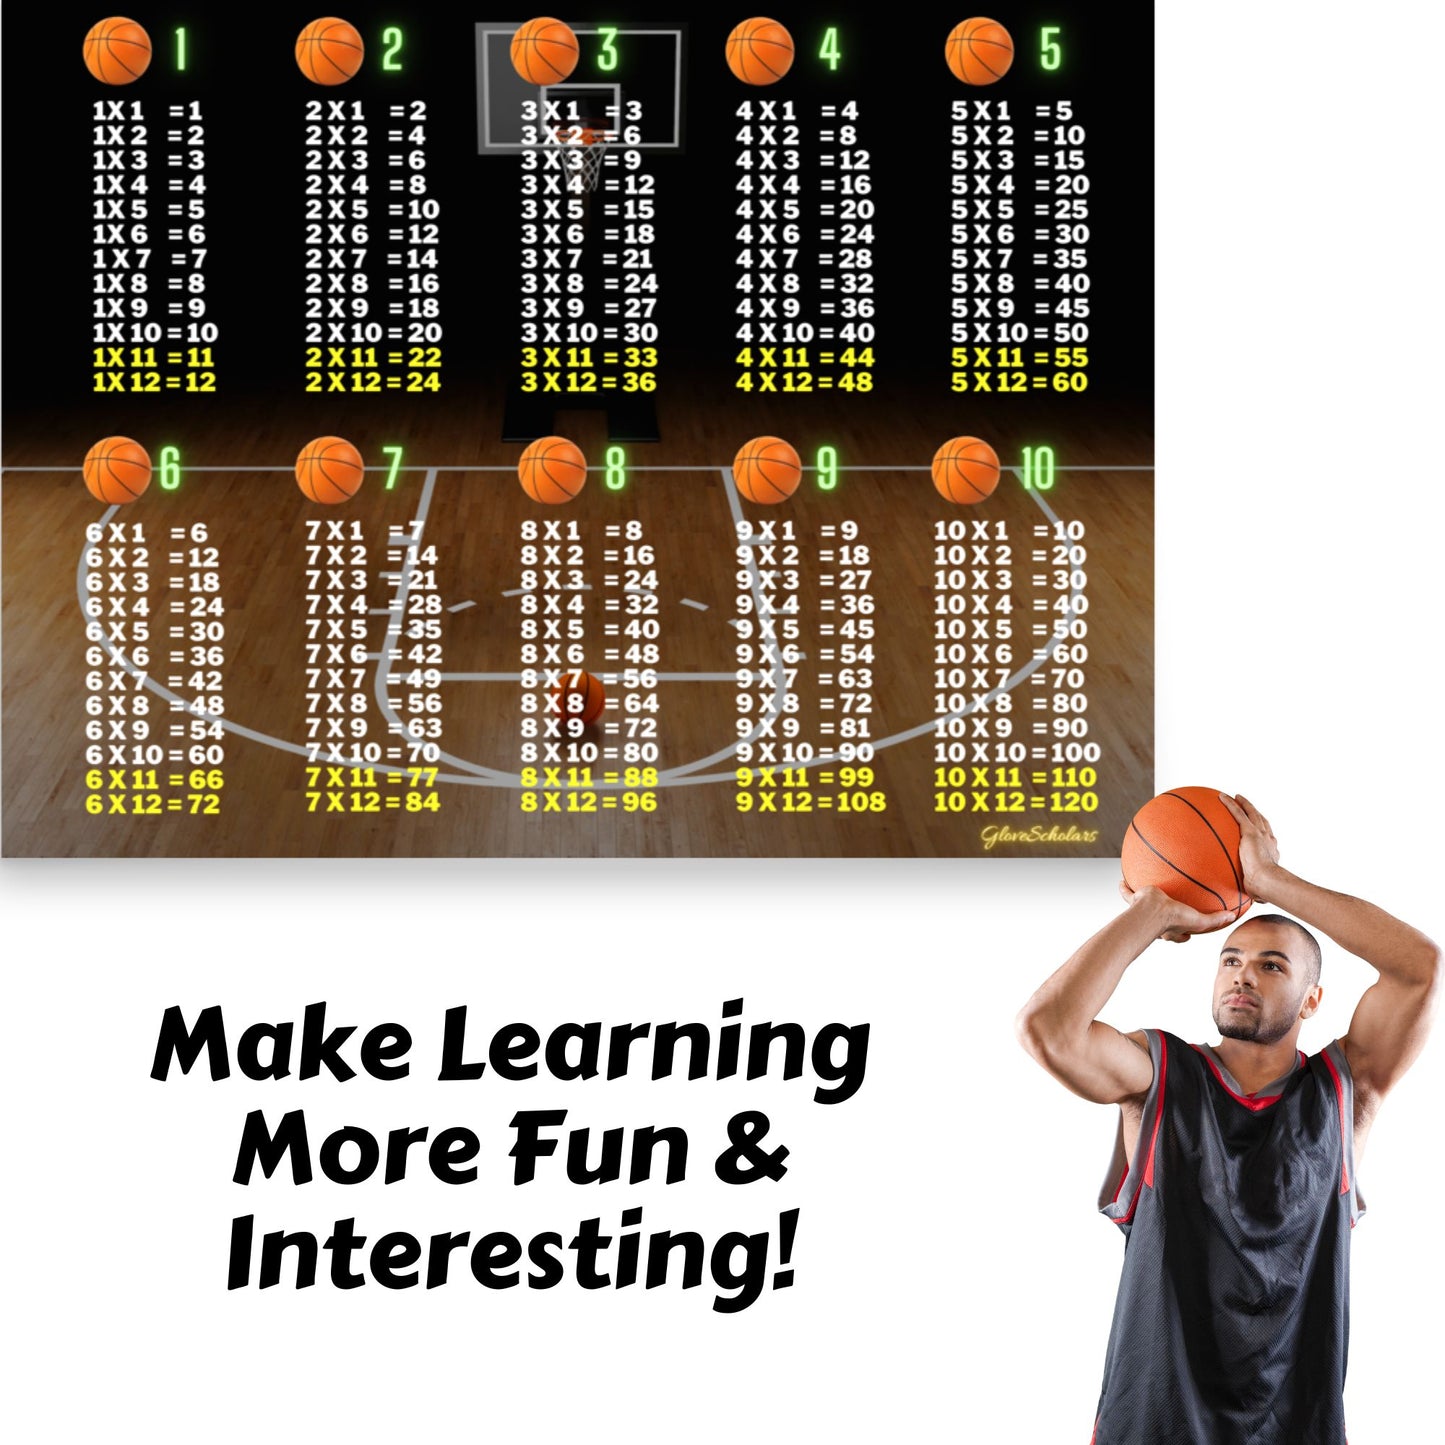 Basketball Court Multiplication Poster